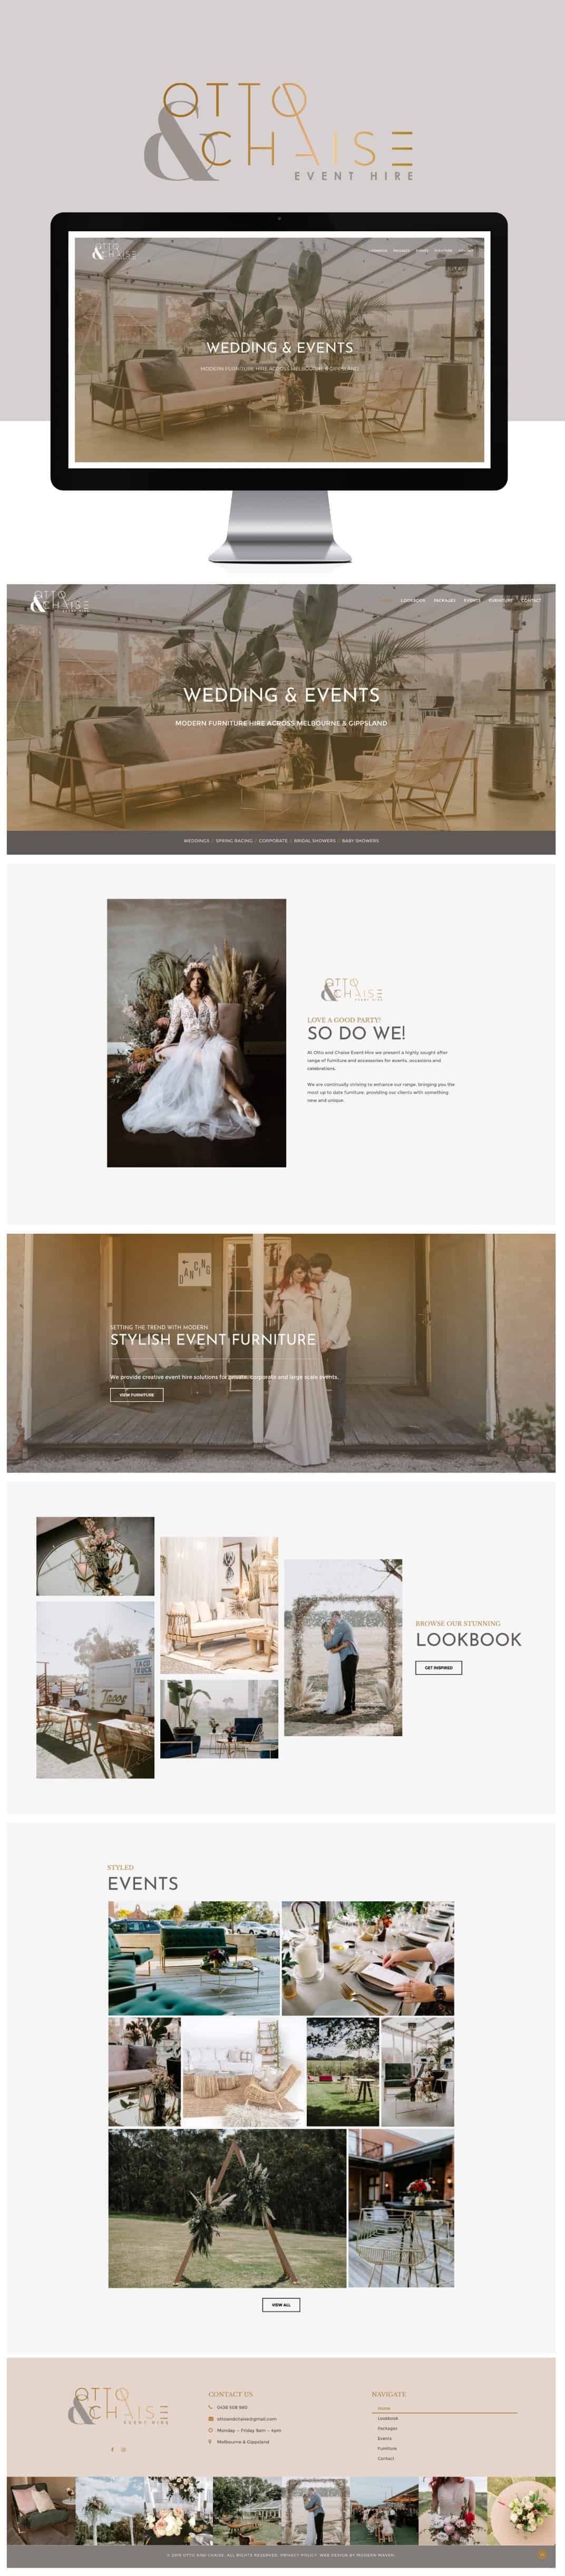 Wordpress website design wedding event hire